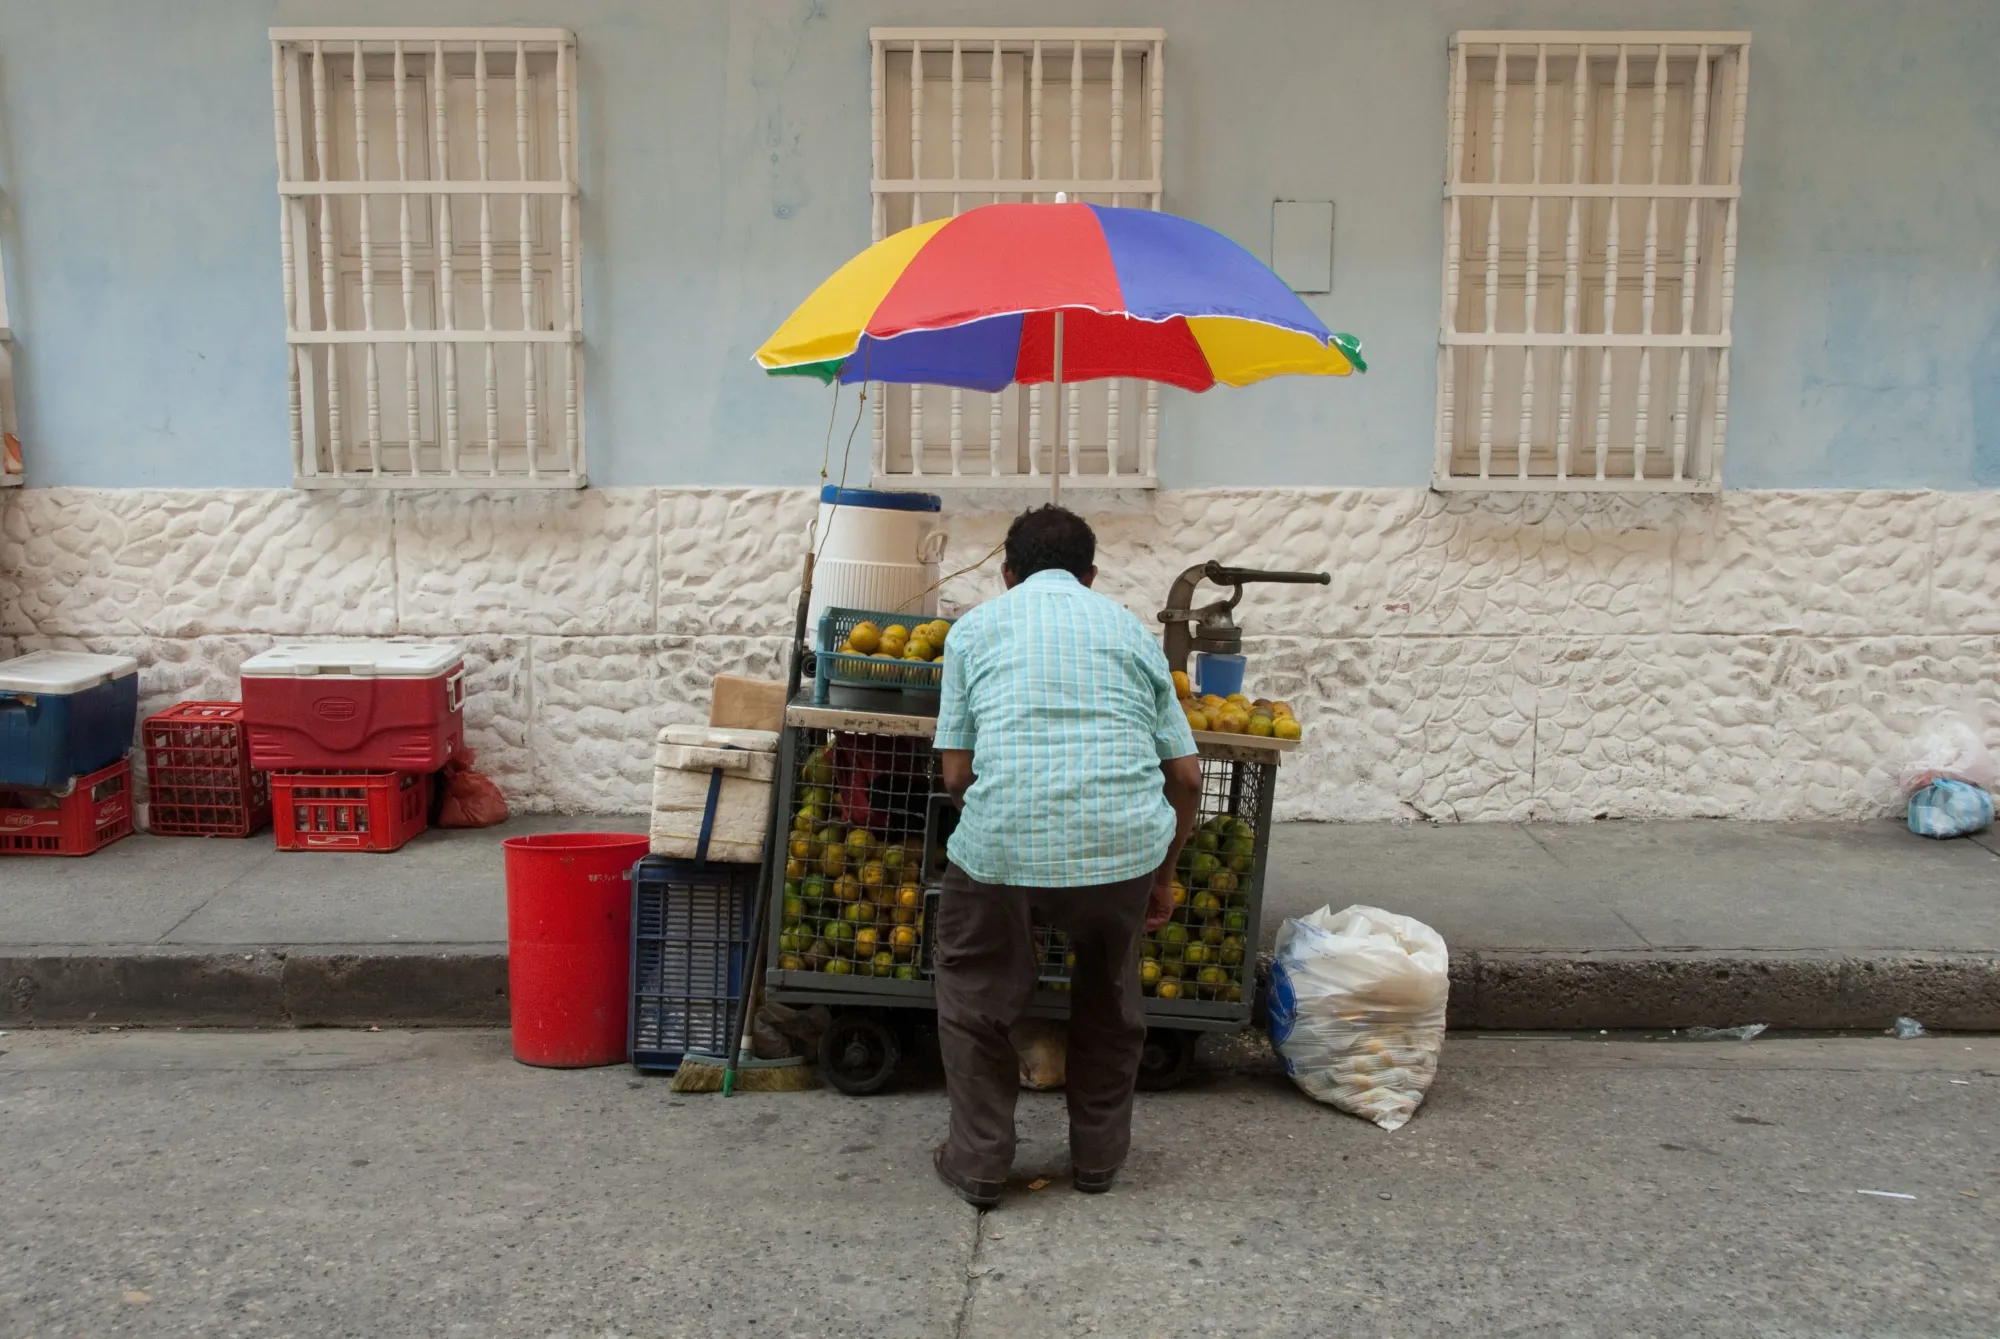 Image of a street vendor in Medellín, Colombia